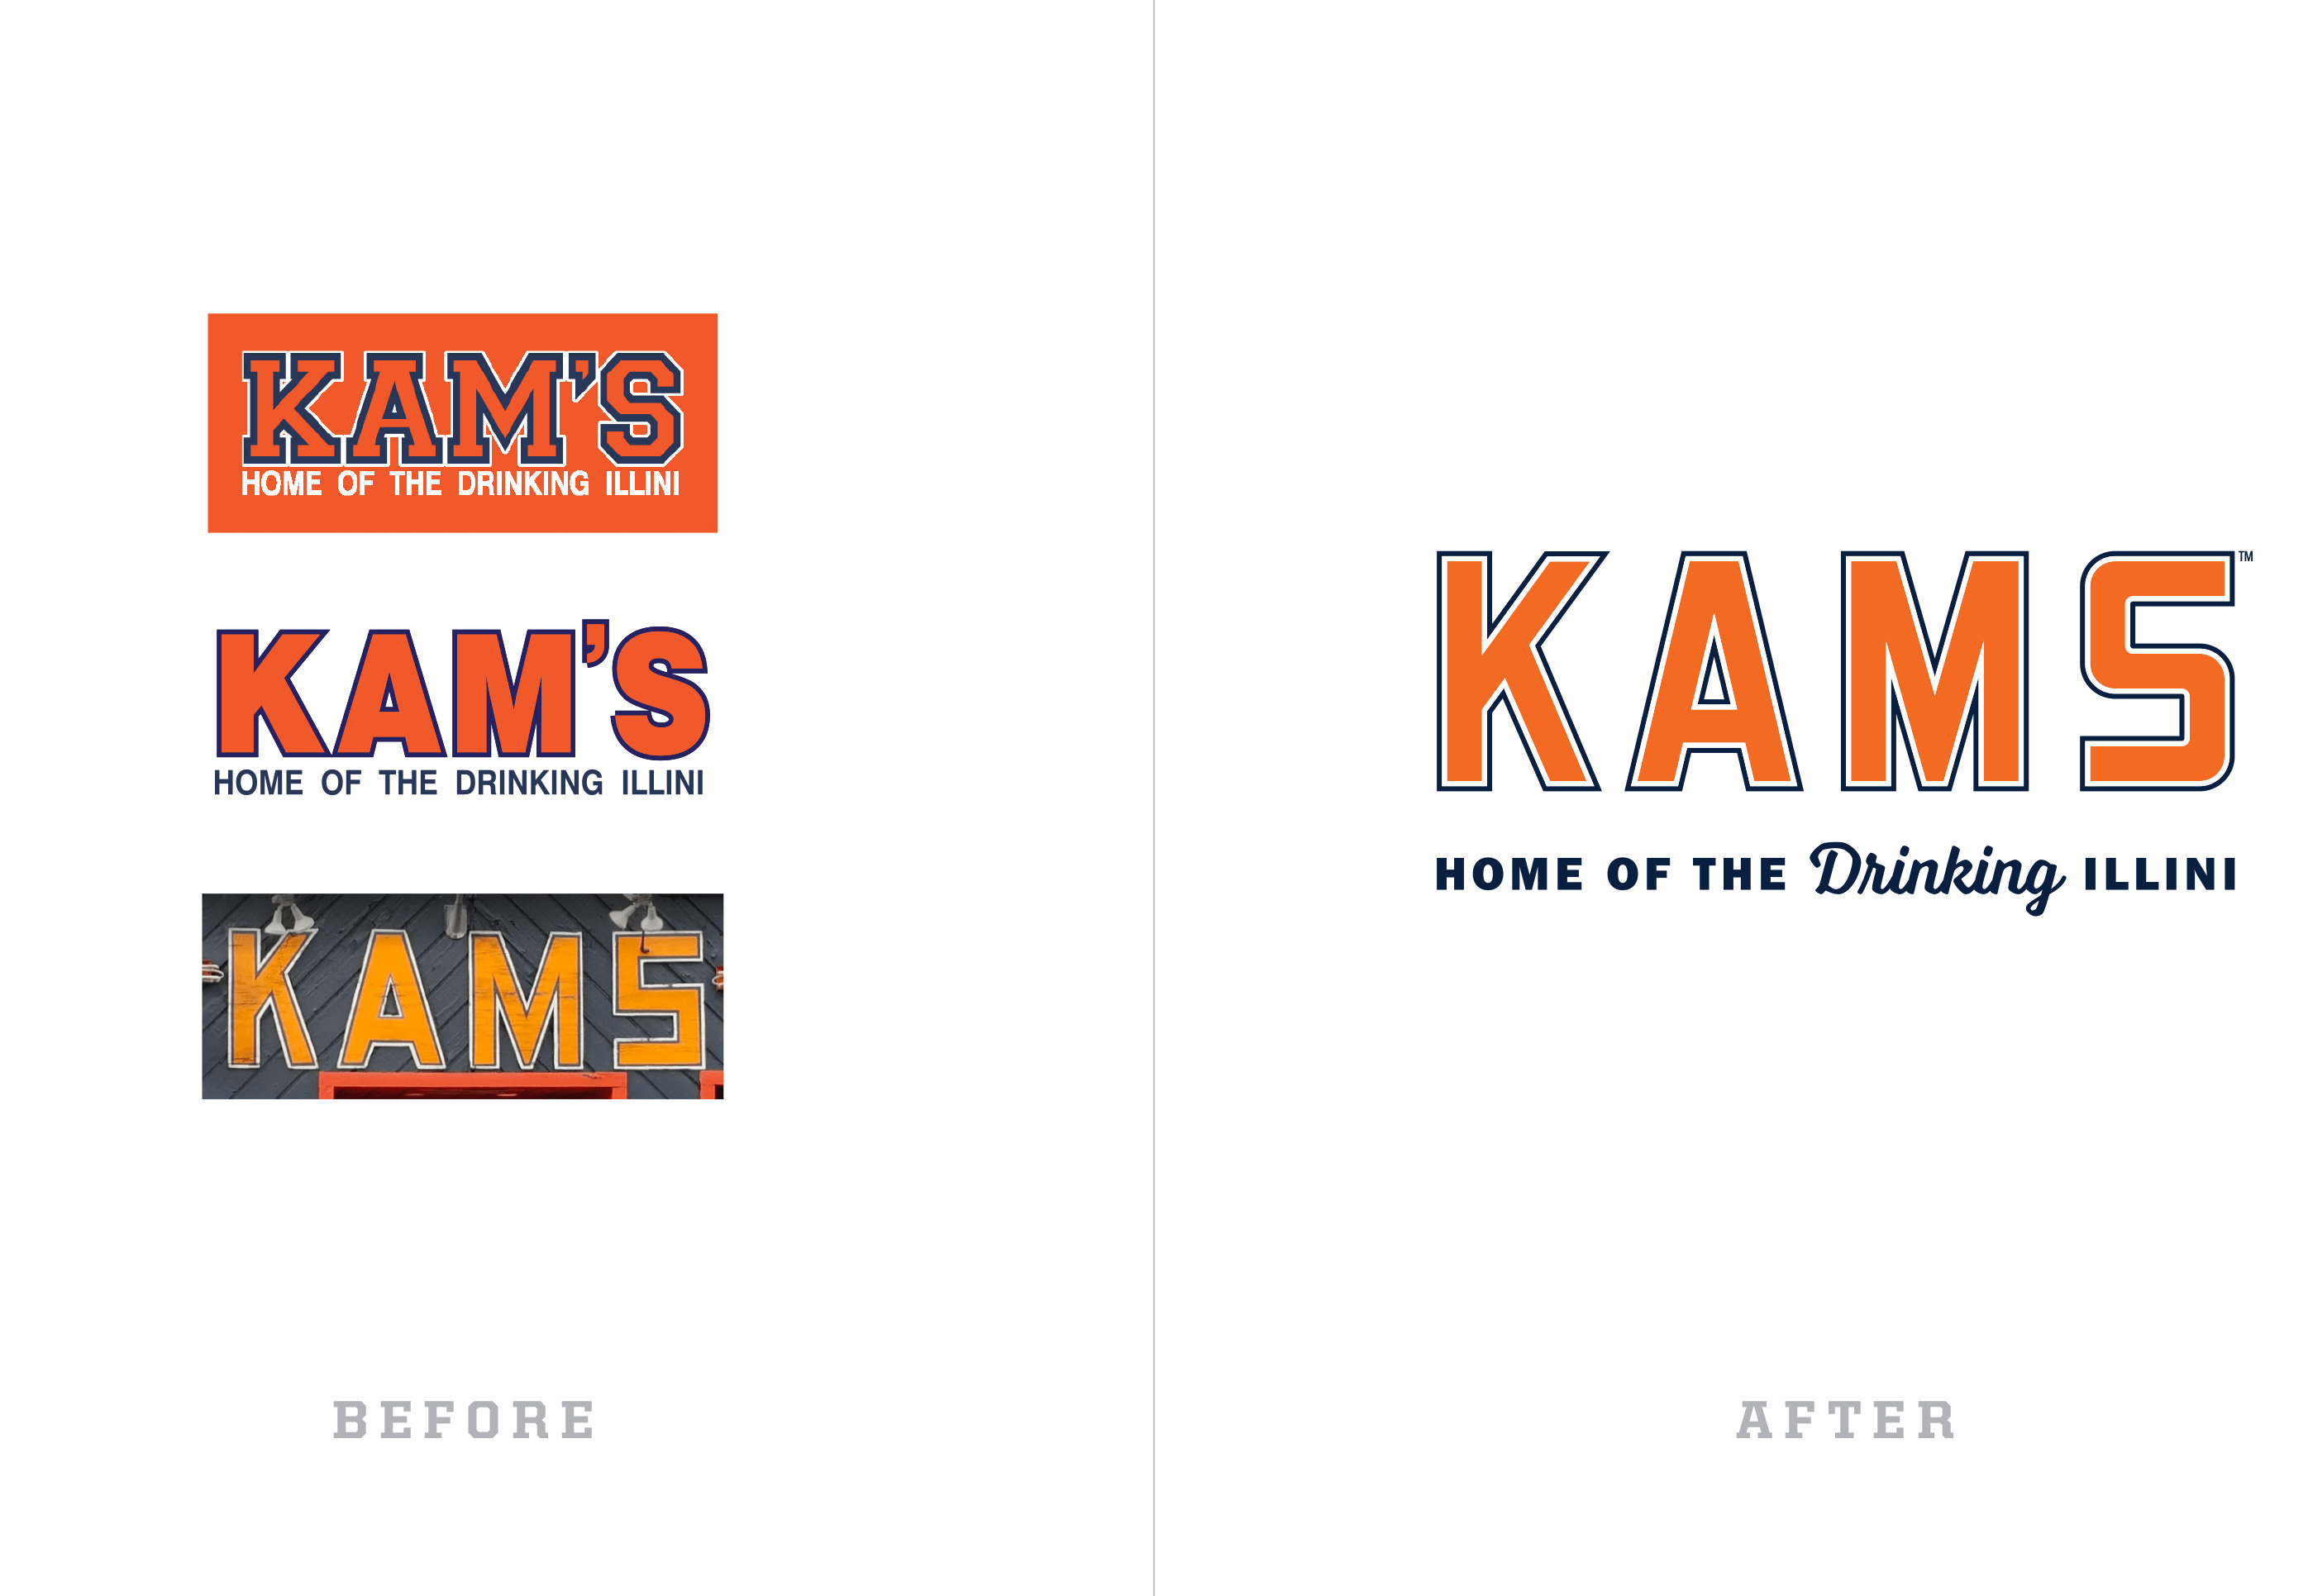 KAMS Branding, Signage, and Apparel